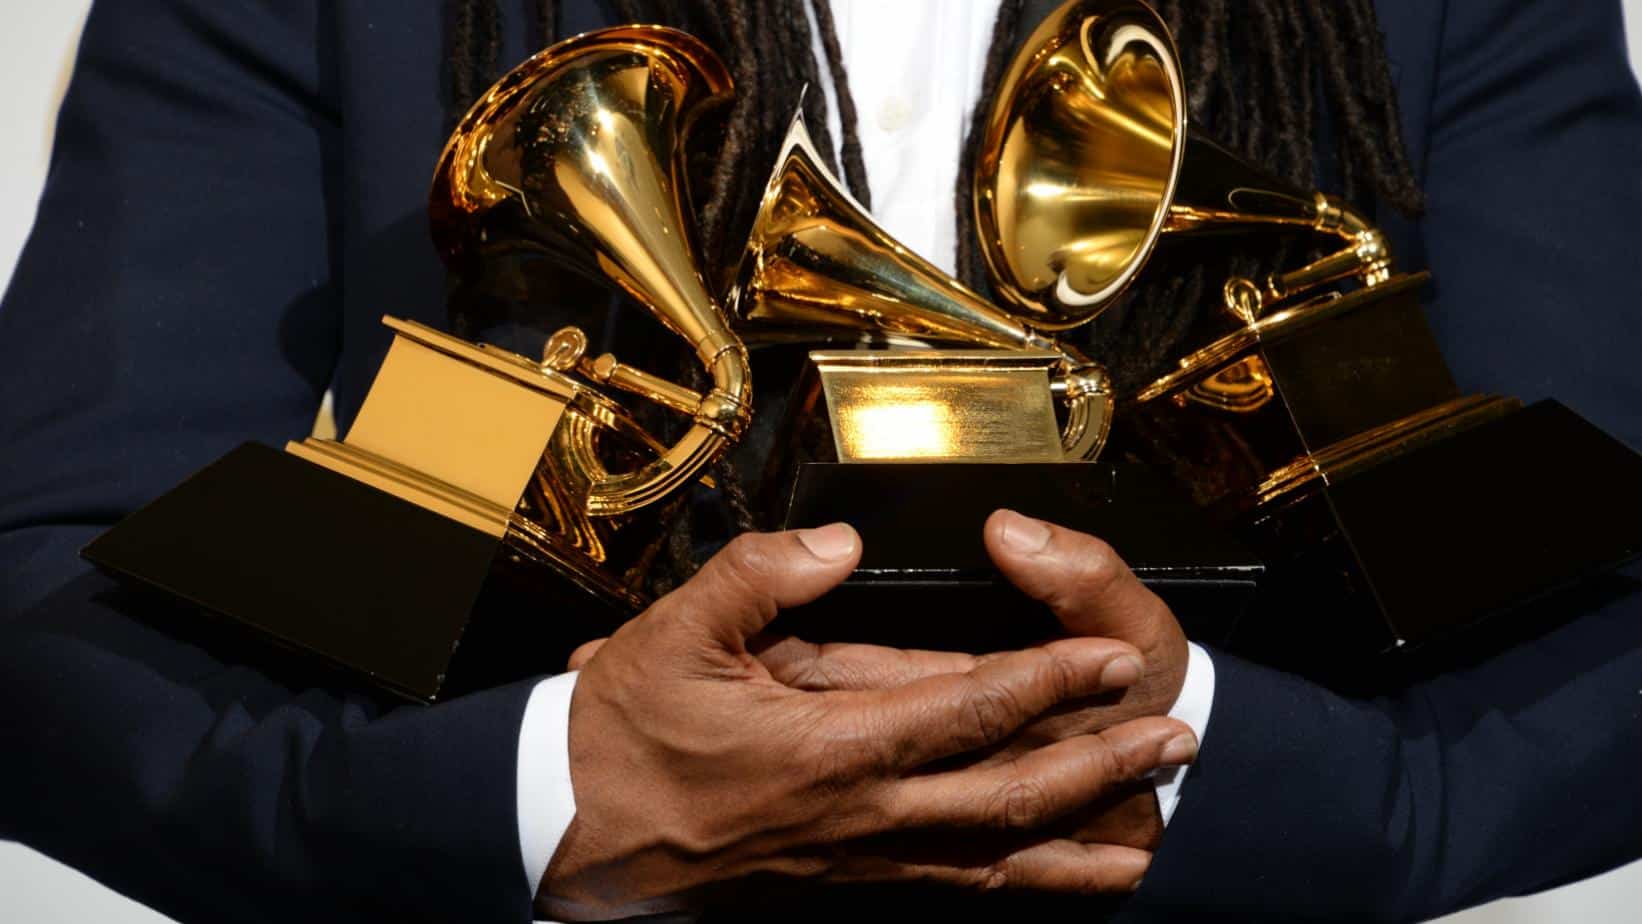 the Grammy Awards